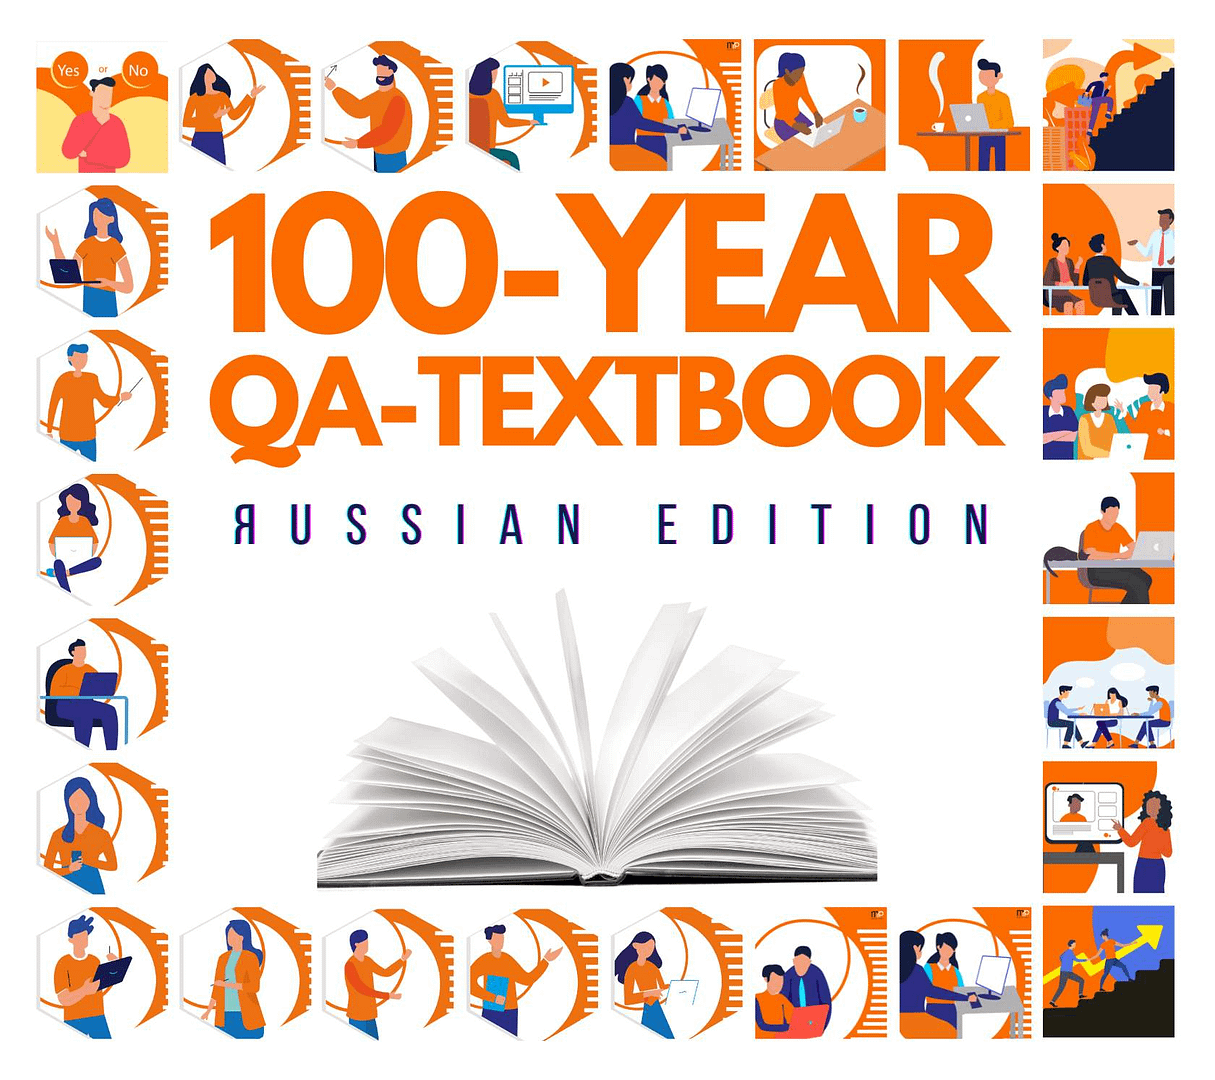 The 100-Year QA-Textbook - Яussian Edition (1.0.0)